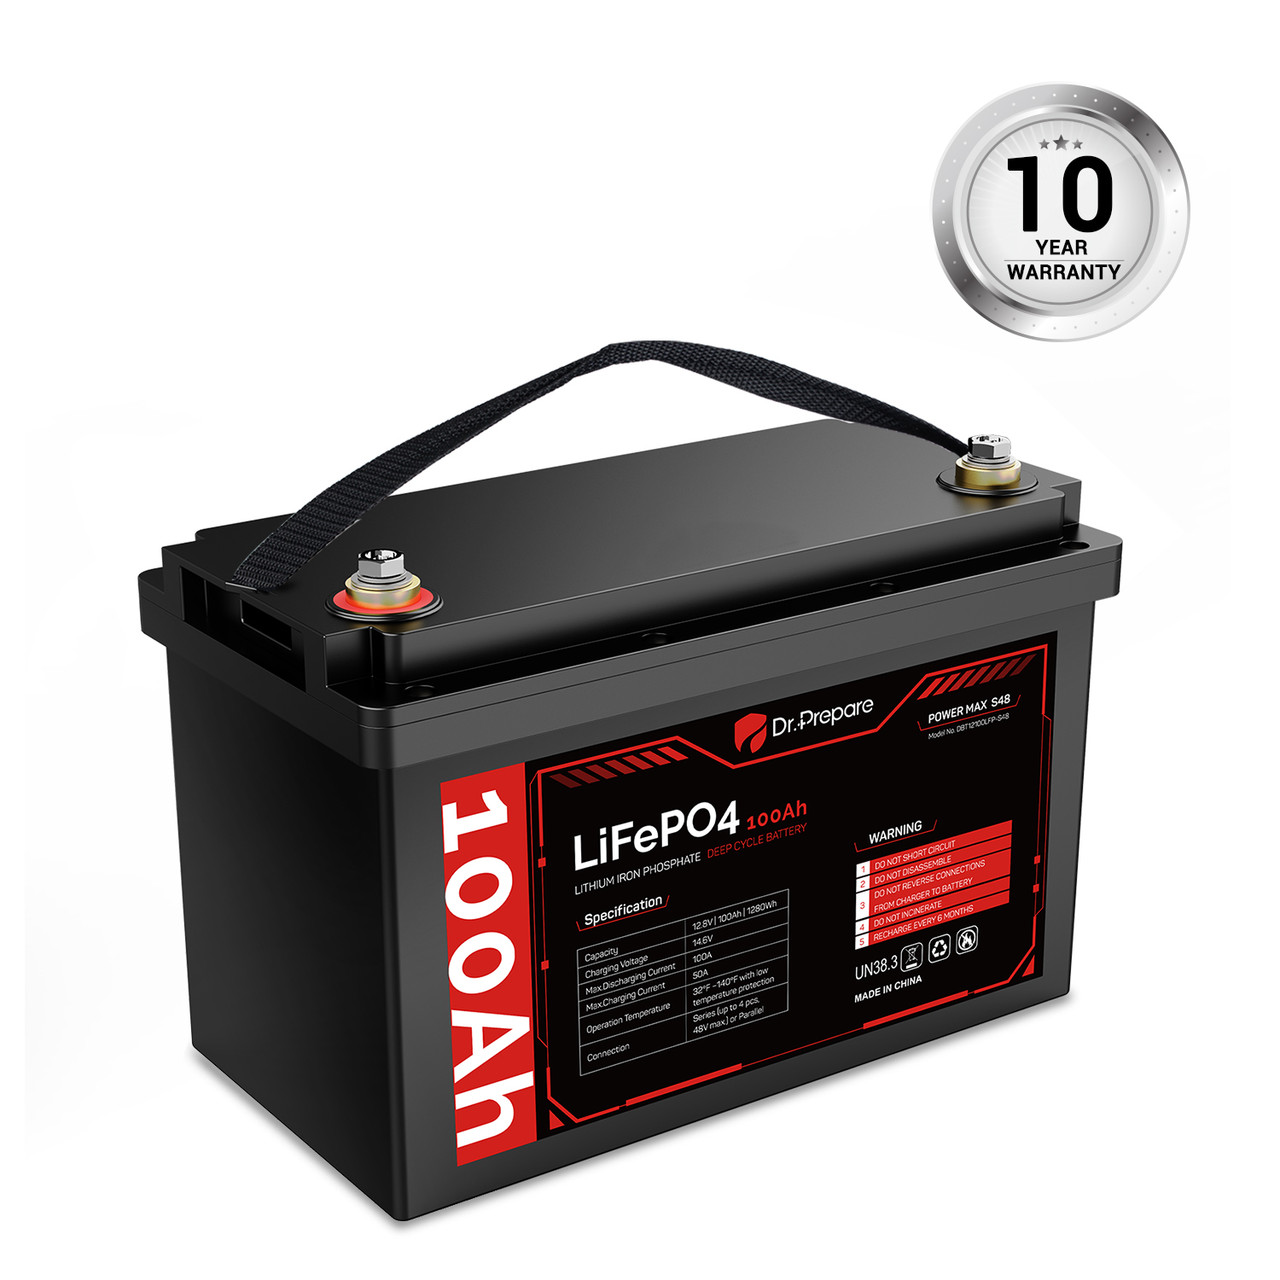 LiFePO4 12V 100Ah Lithium Iron Phosphate Battery